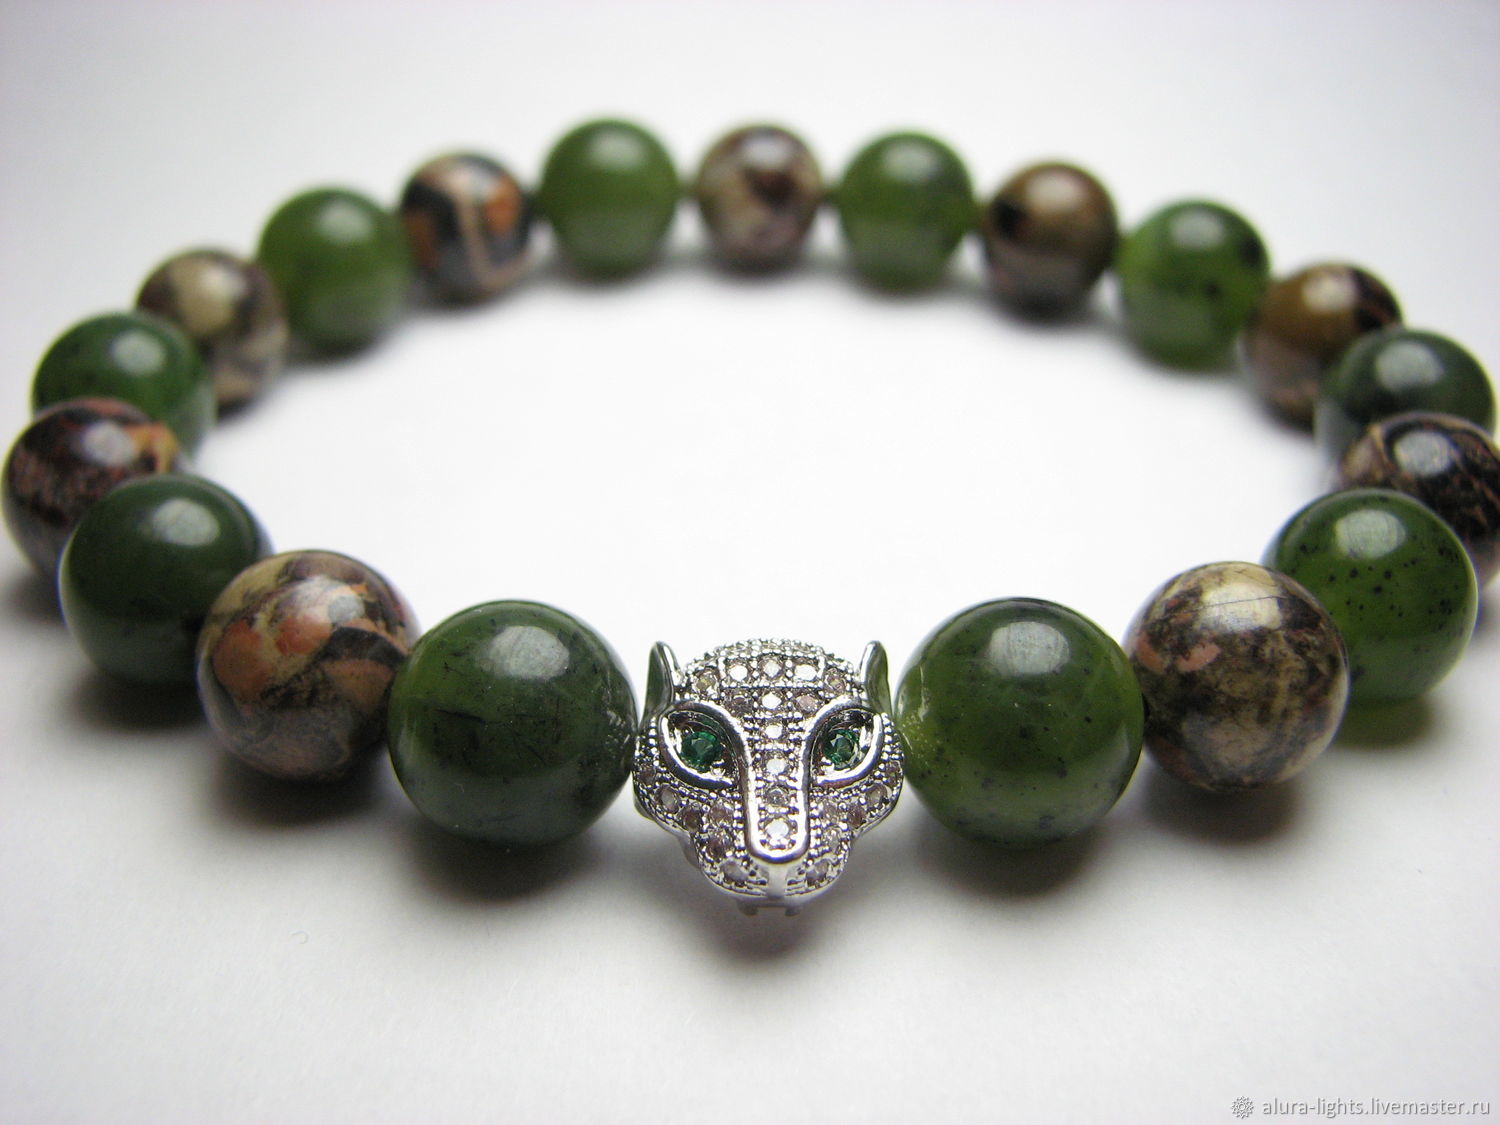 Bracelet with jade and Jasper
